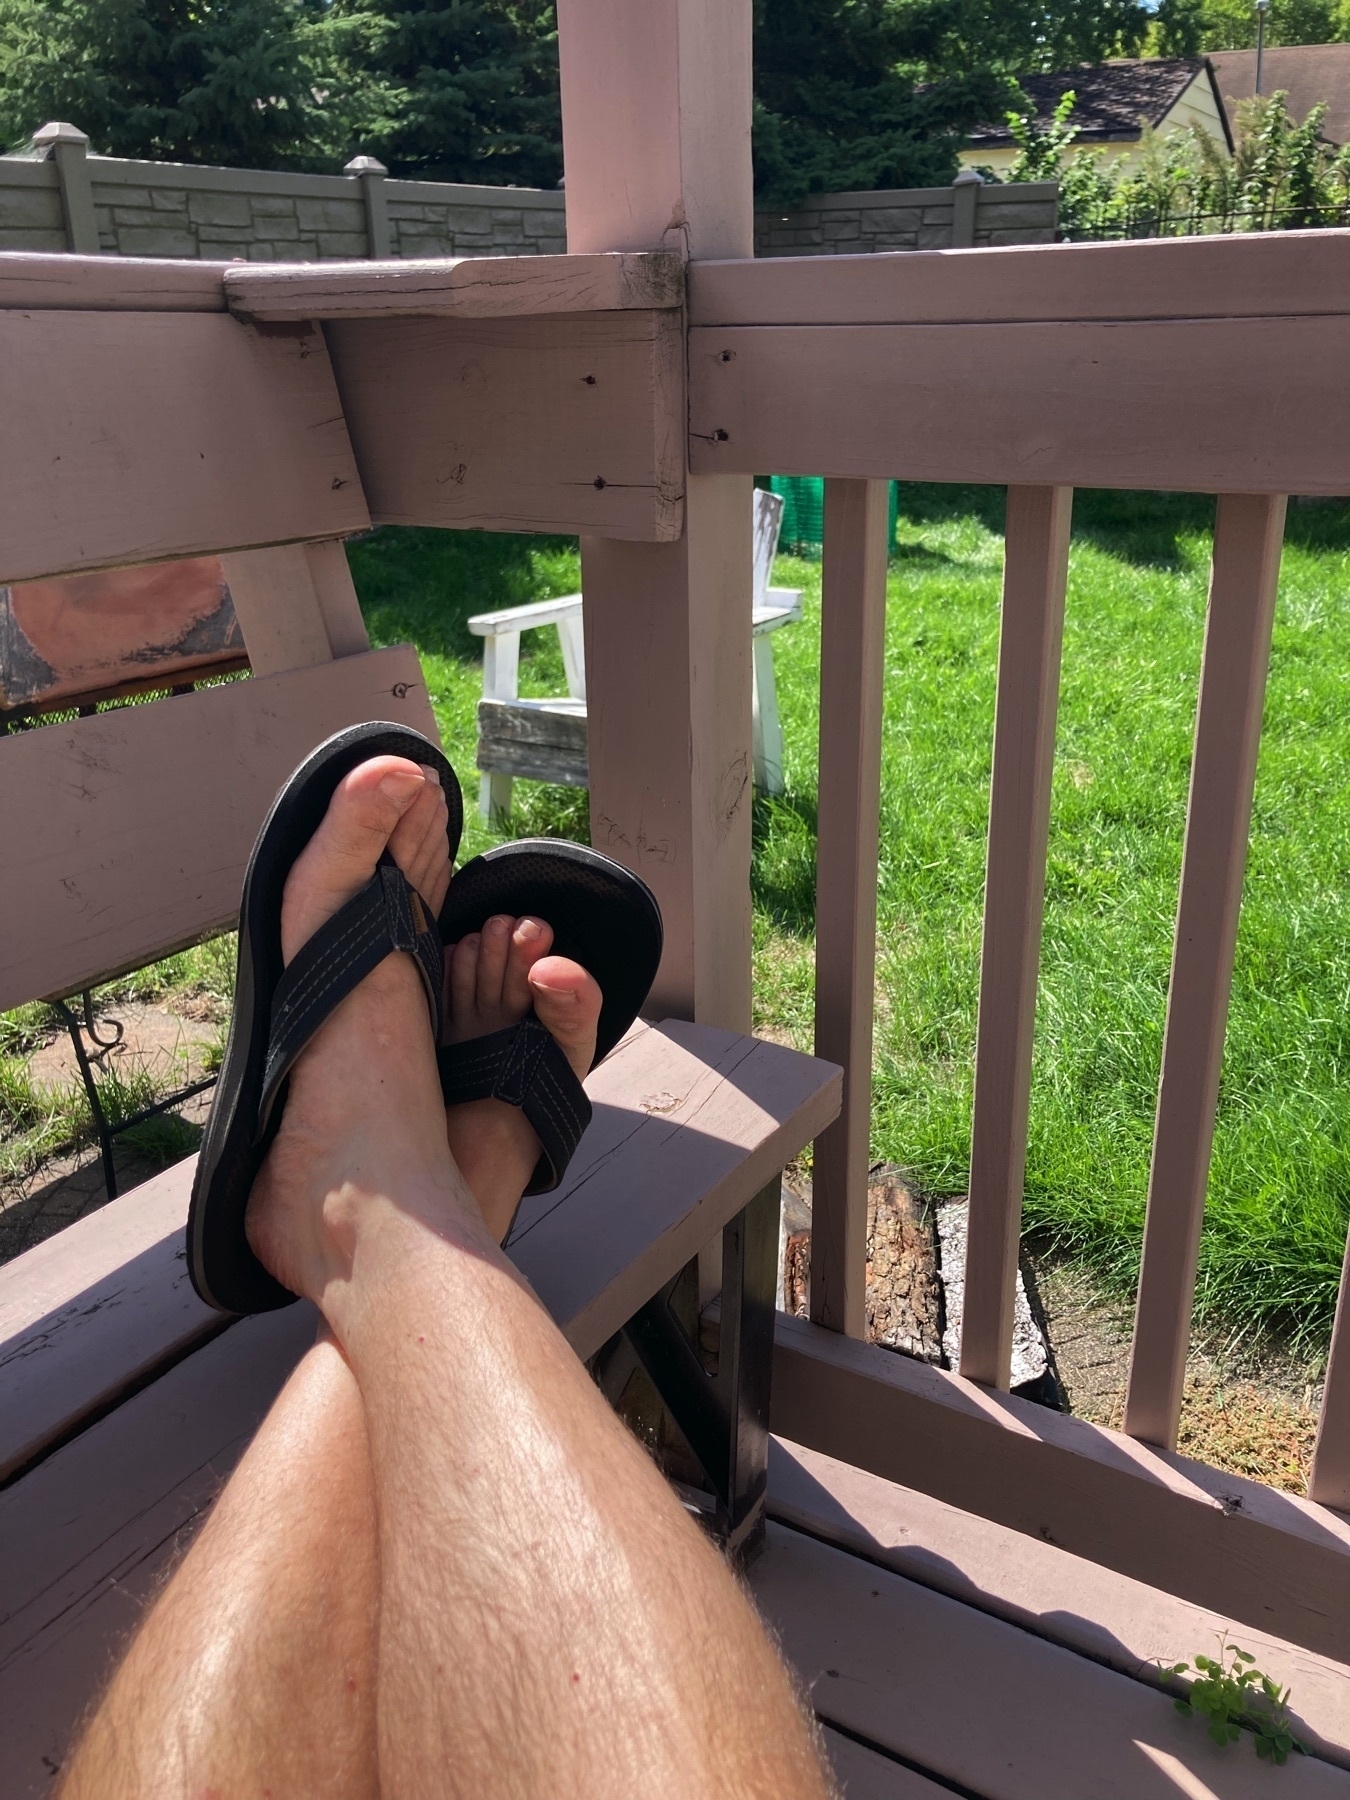 Feet up in flip flops on the back deck